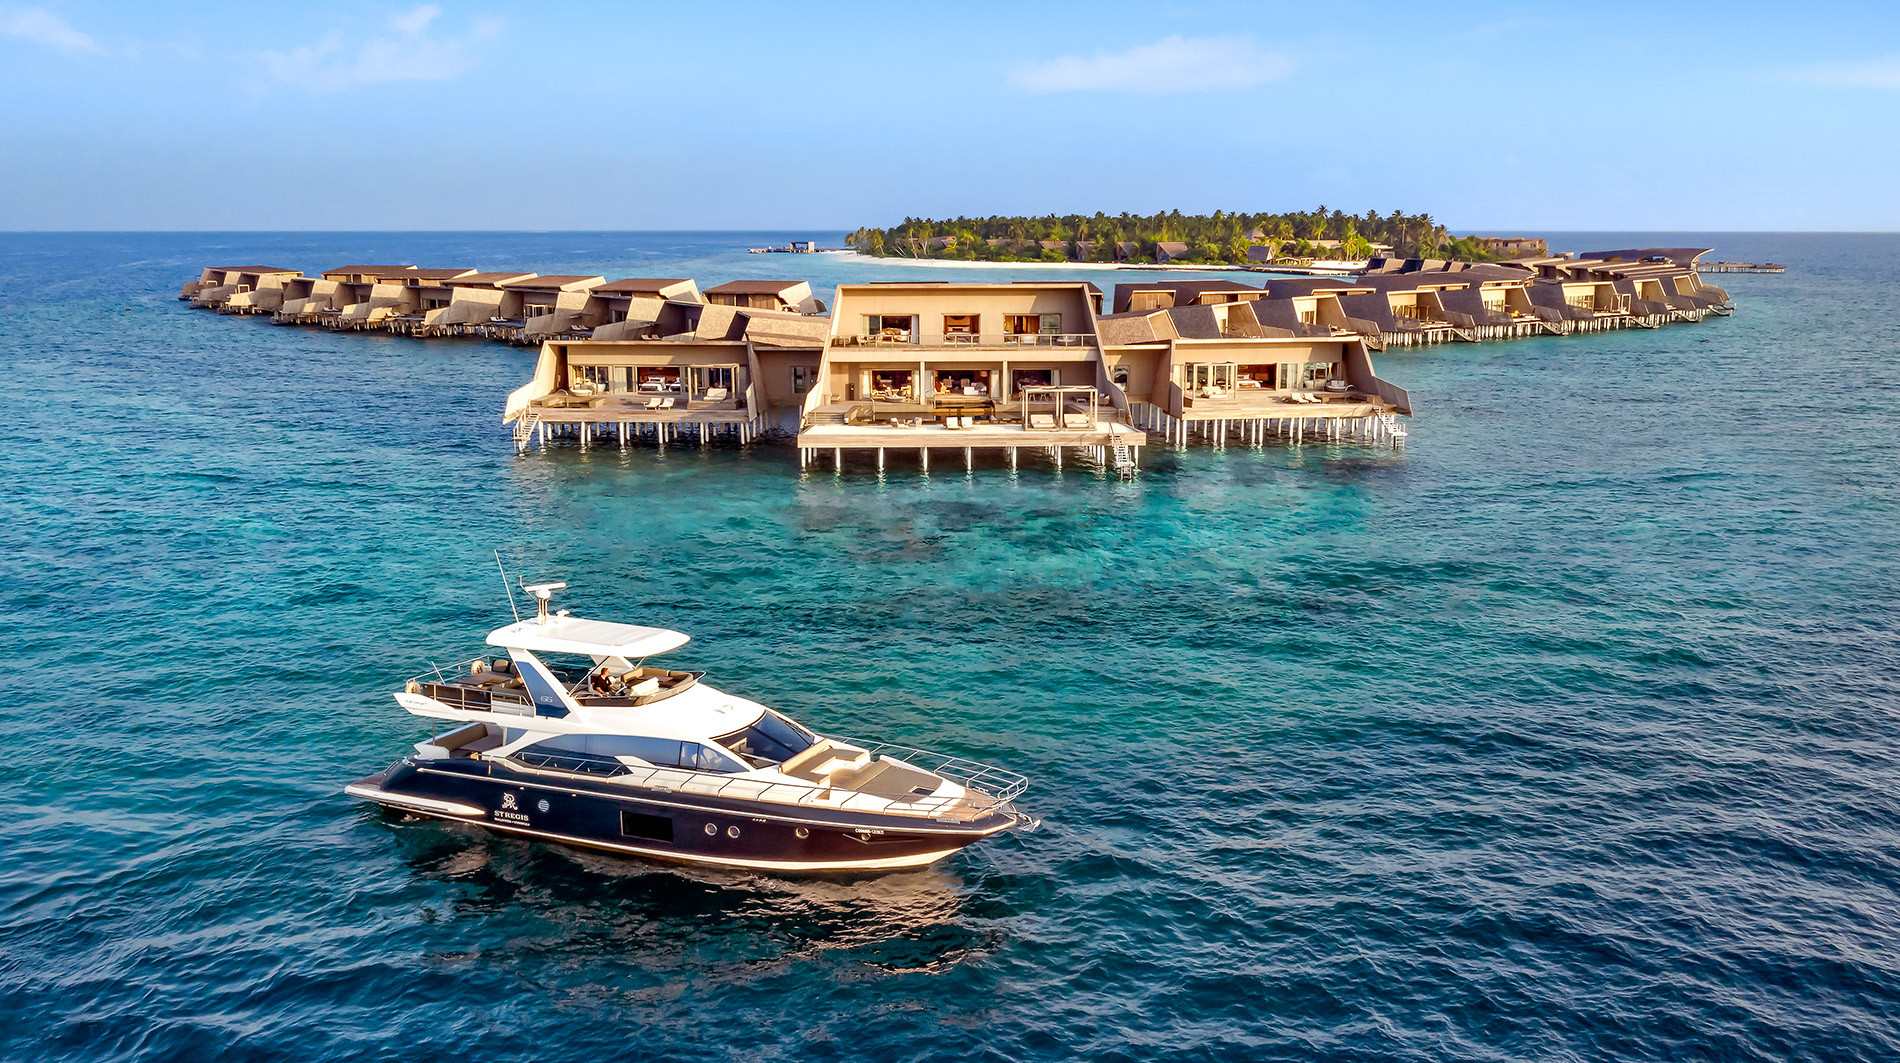 Book an Entire Maldivian Island for 7.6 Million